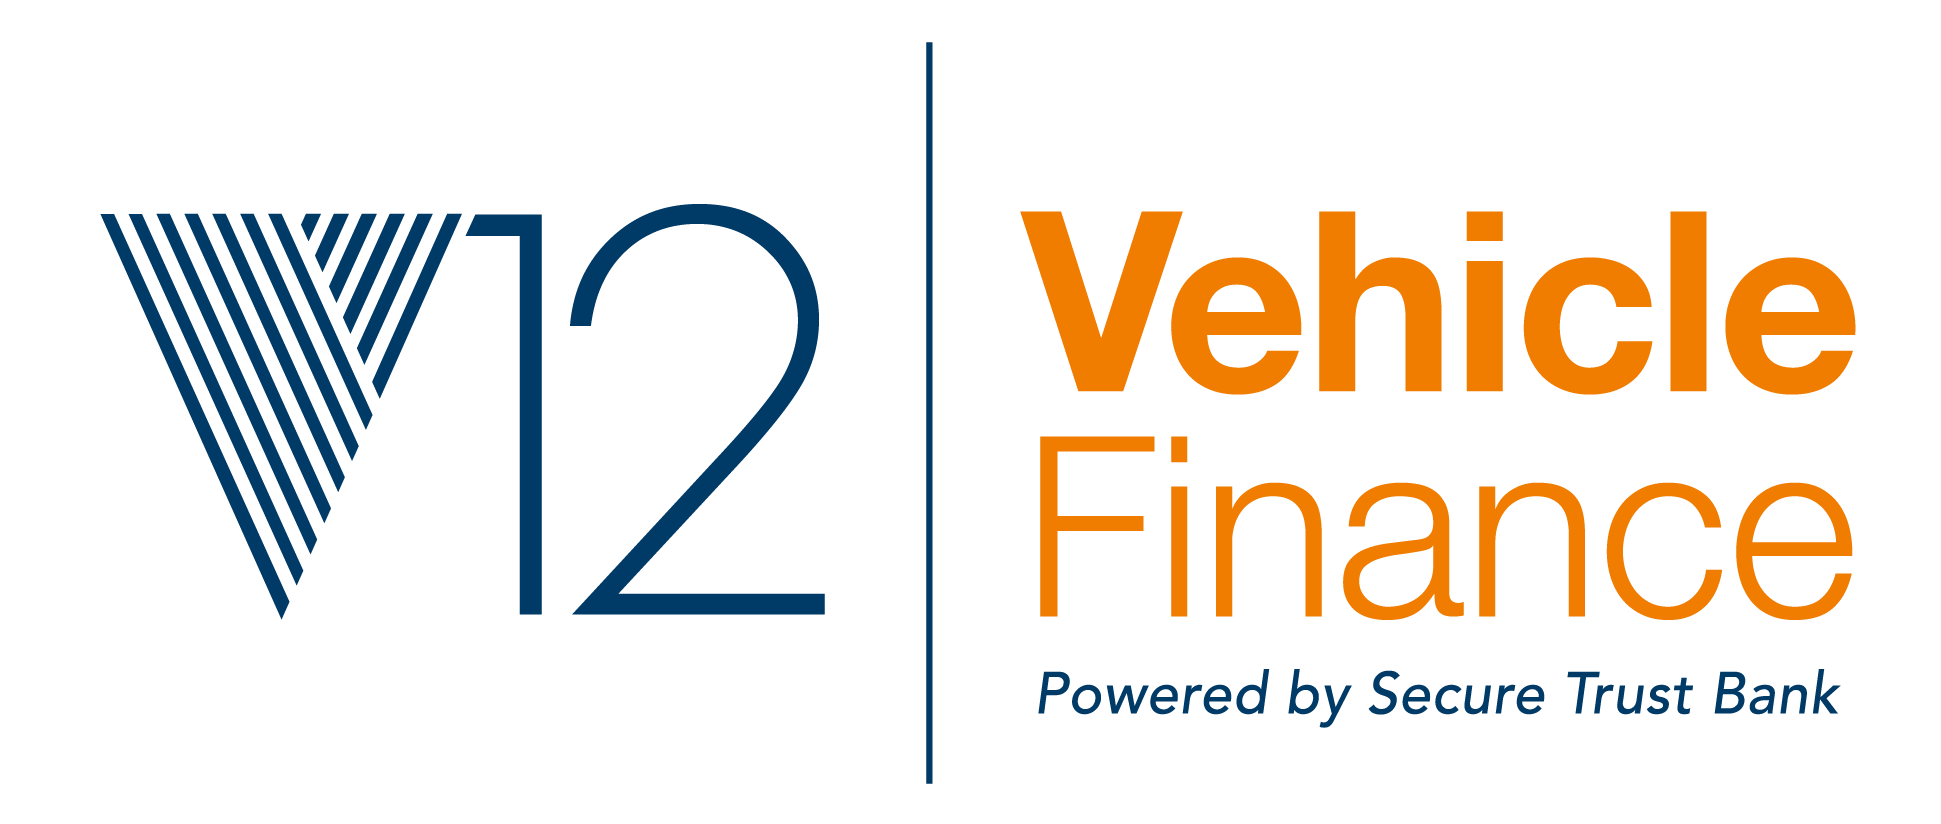 V12_Vehicle_Finance_Logo_RGB-01.png